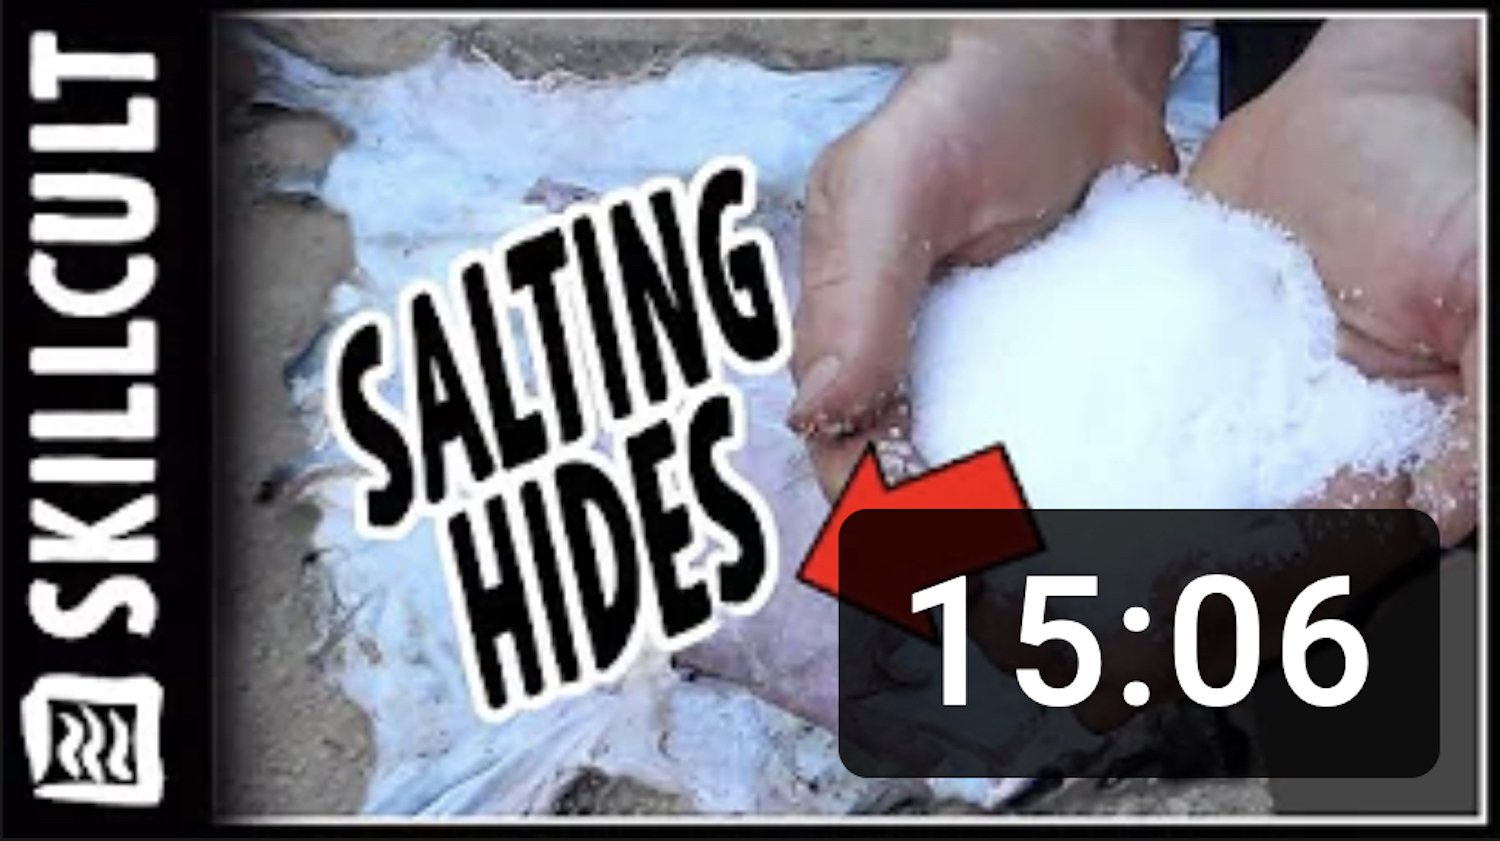 Salting Hides